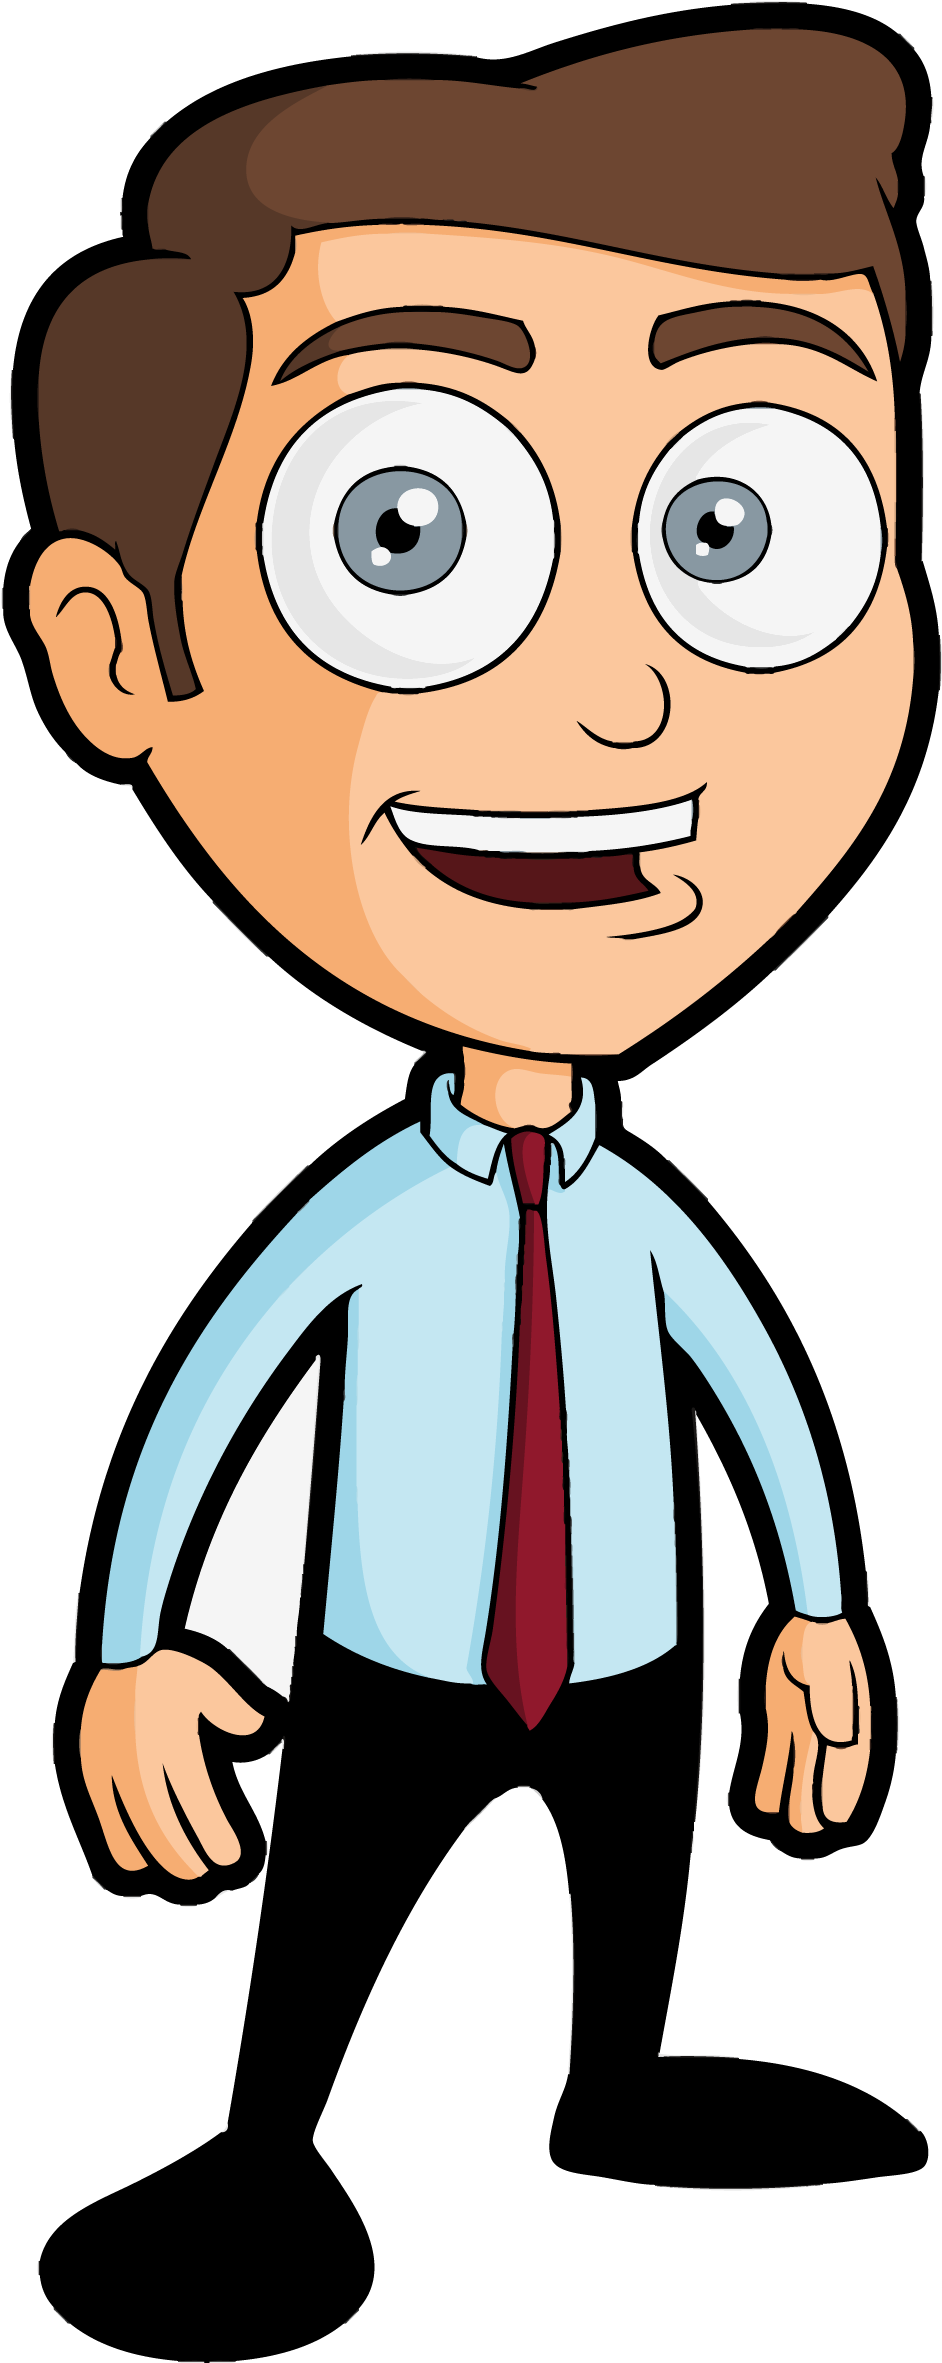 Free Business Man Cartoon Vector You Won't Believe - Free Business Man Cartoon Vector You Won't Believe (2500x2500)